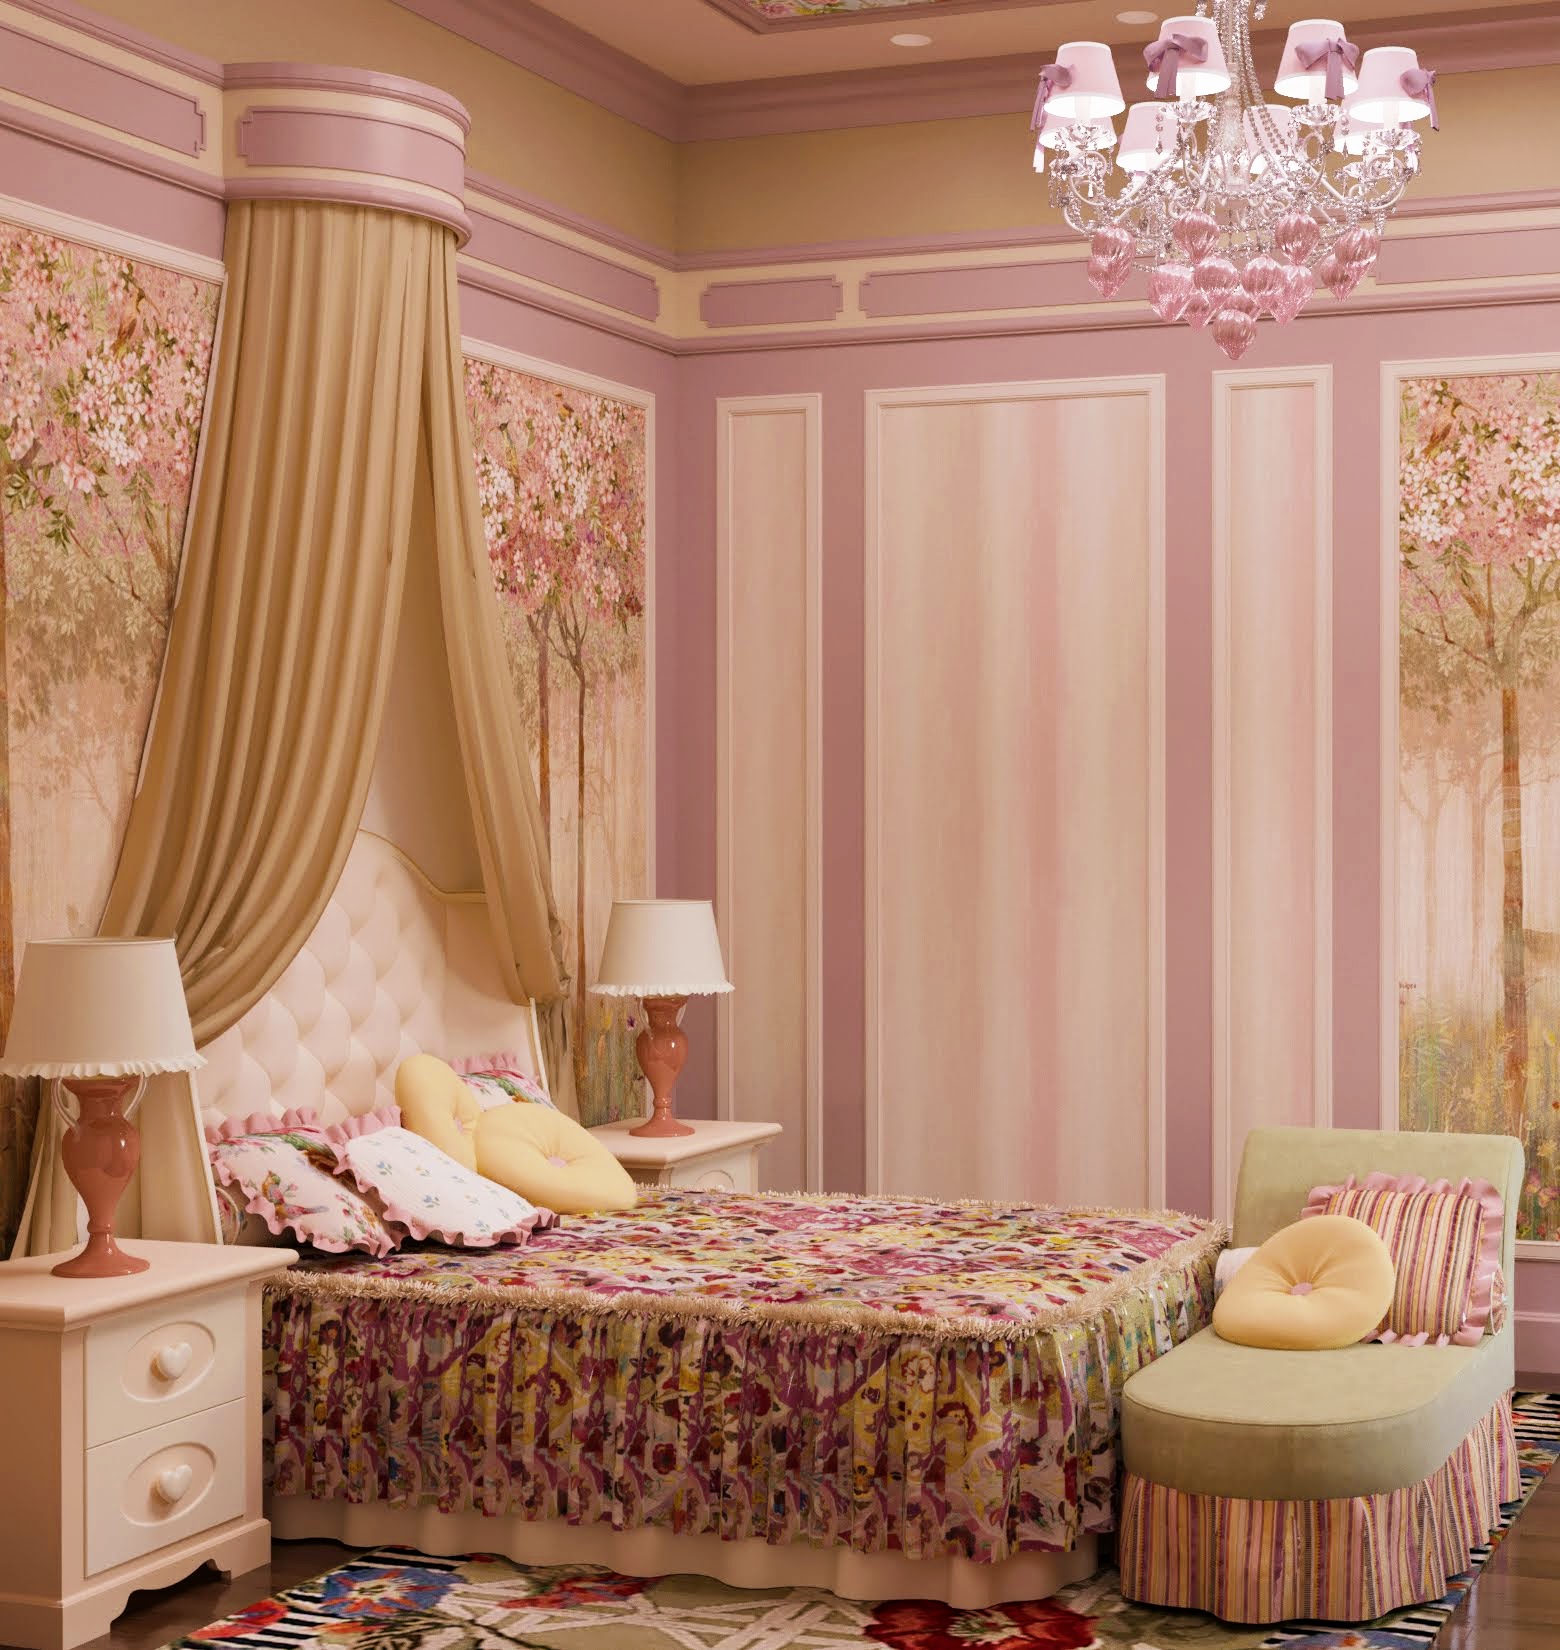 Textile design in a bedroom decoration